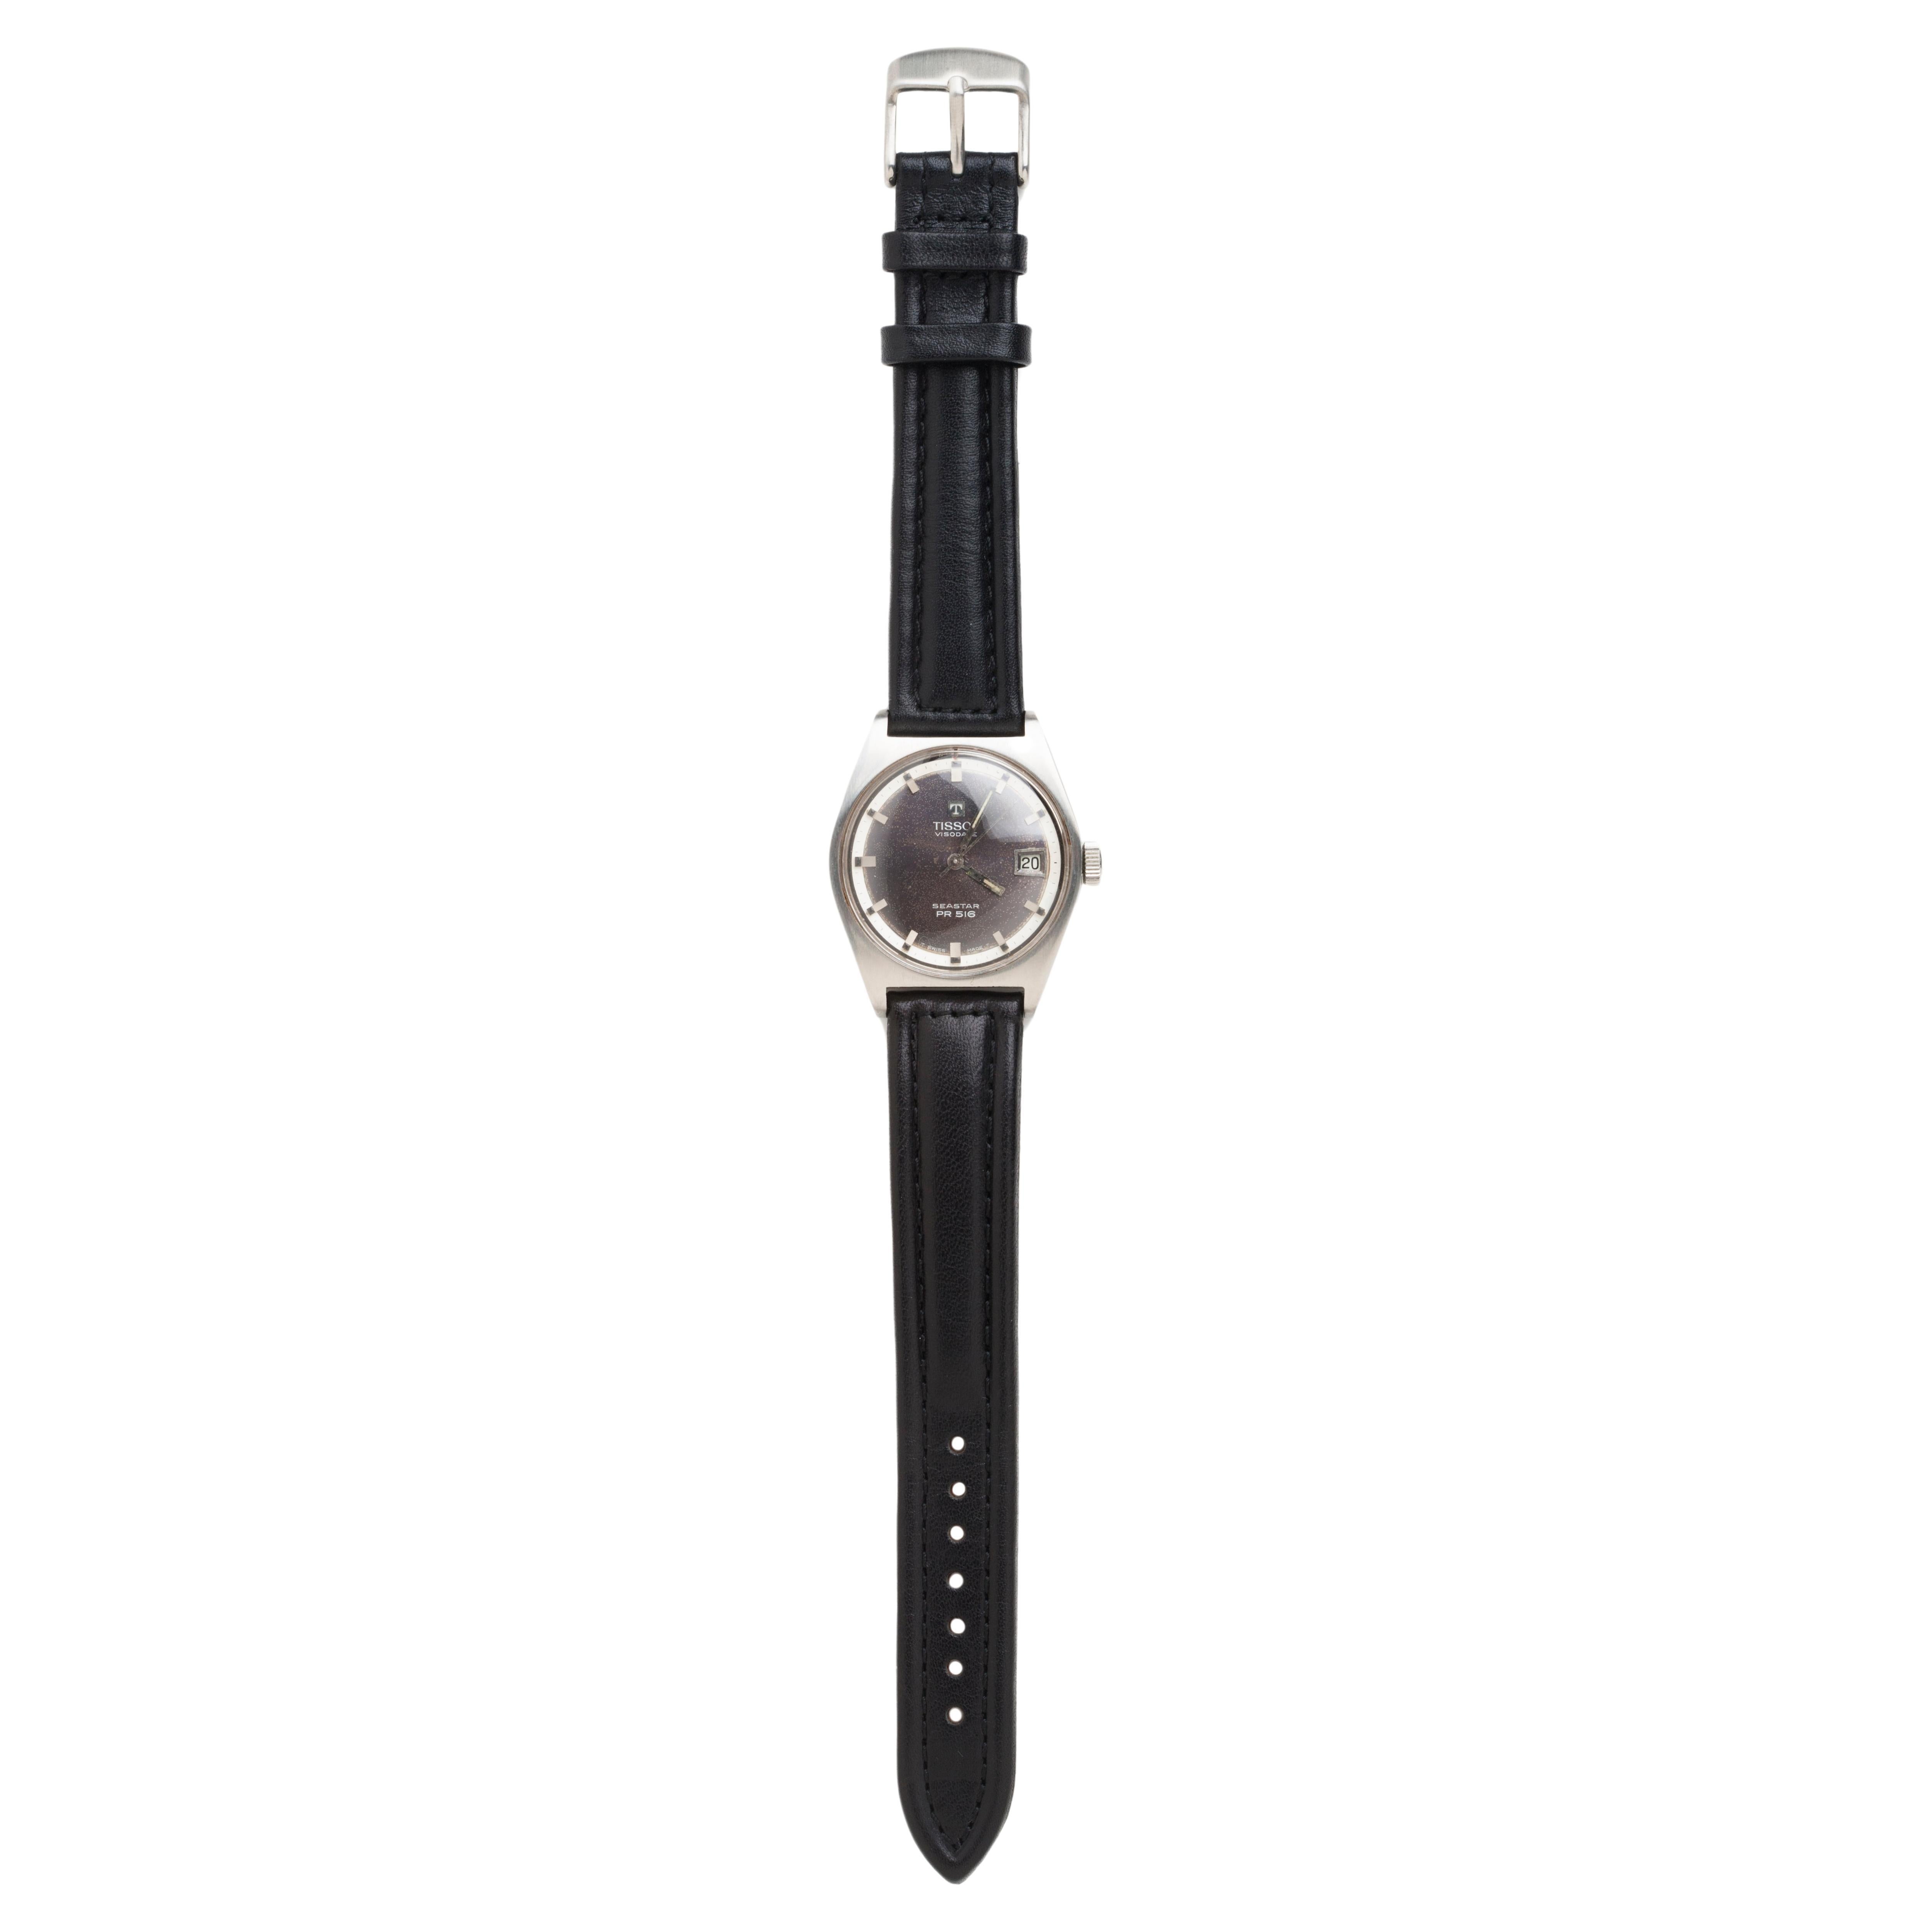 Vintage automatic swiss watch, Tissot VisoDate SeaStar PR 516, ca. 1965. 